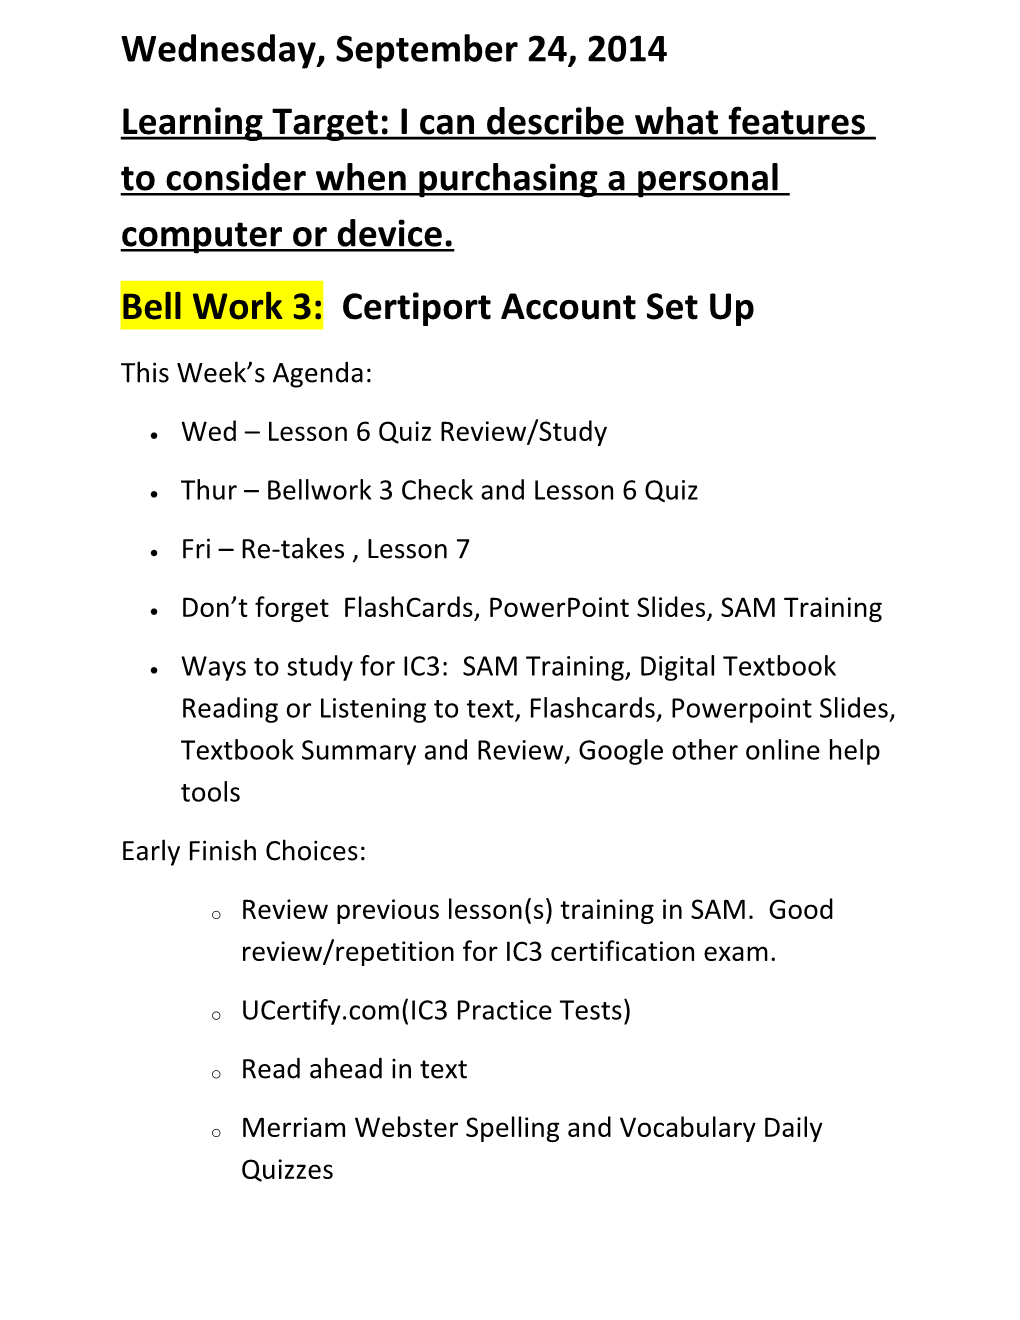 Bell Work 3: Certiport Account Set Up